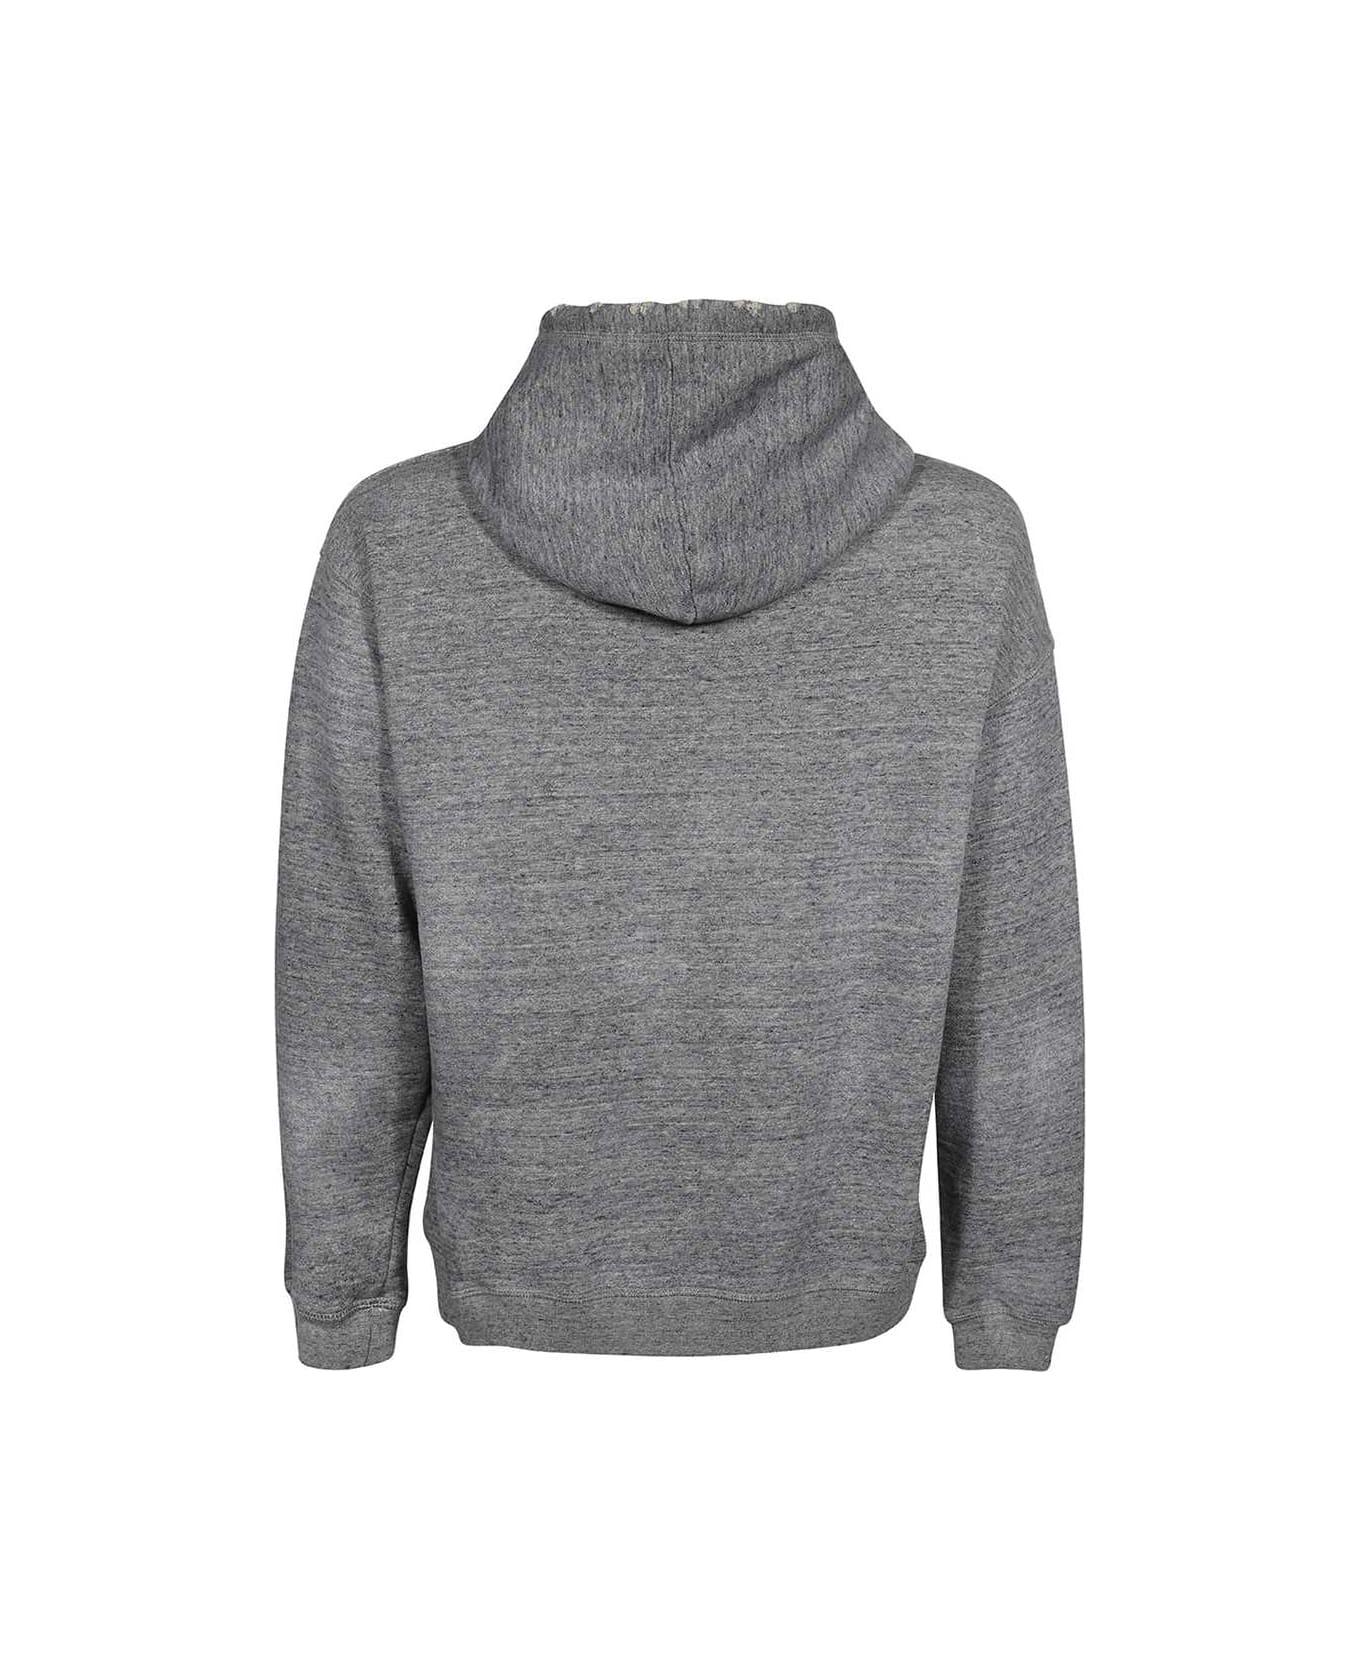 Dsquared2 Sweatshirt - grey